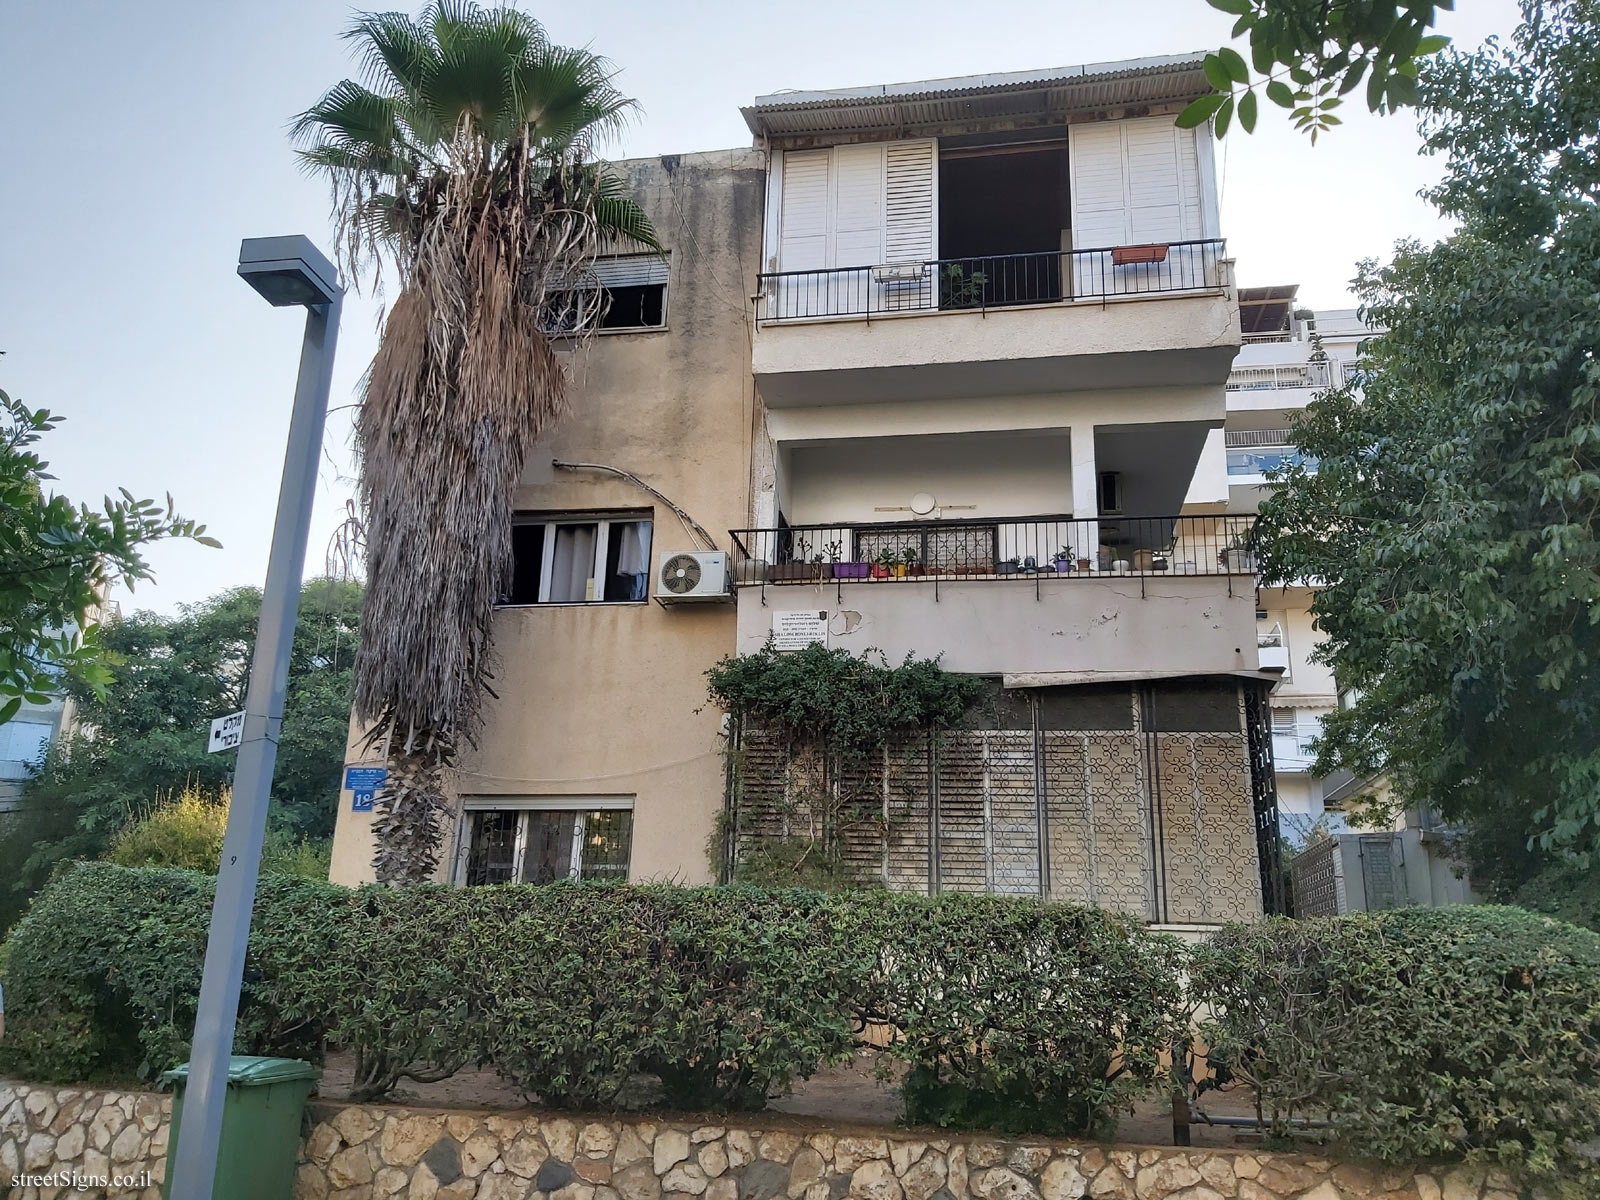 The house of Shalom Ronli-Riklis - Mikha St 18, Tel Aviv-Yafo, Israel